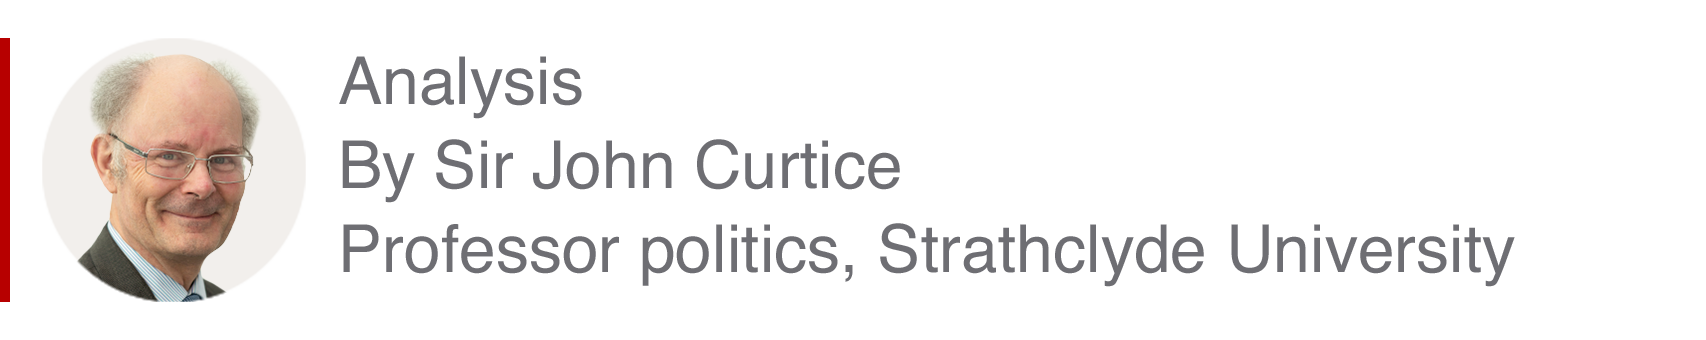 Analysis box by Sir John Curtice, professor politics, Strathclyde University